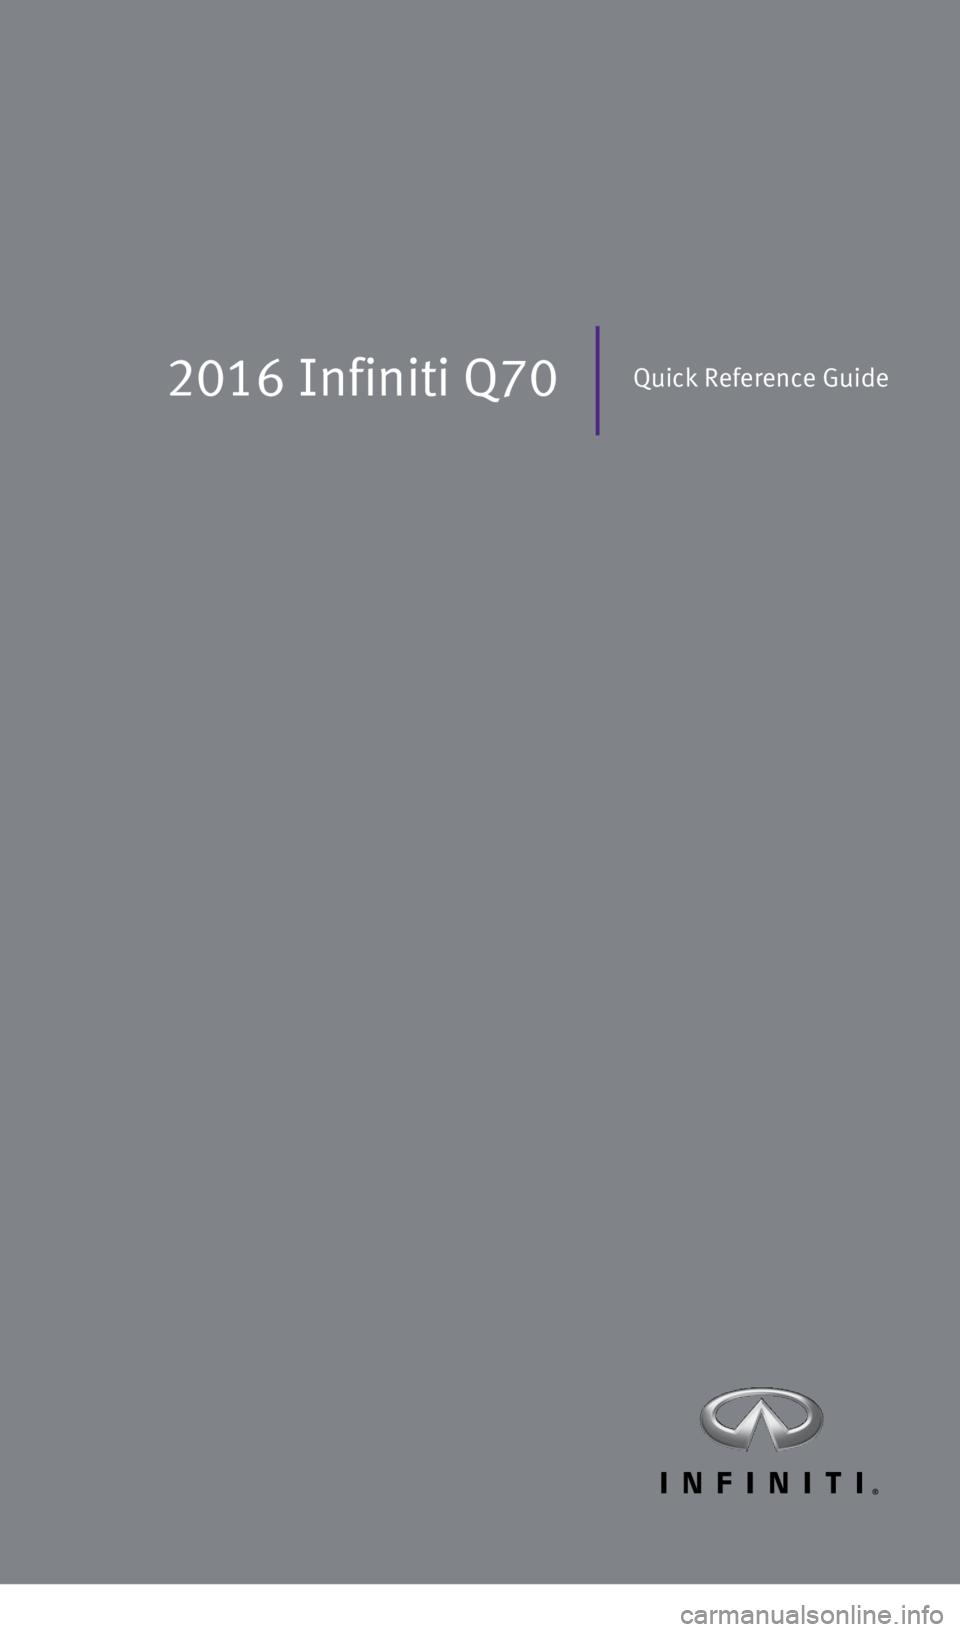 INFINITI Q70 2016  Quick Reference Guide 2016 Infiniti Q70Quick Reference Guide
1932611_16a_Q70_US_pQRG_092415.indd   29/24/15   11:06 AM 